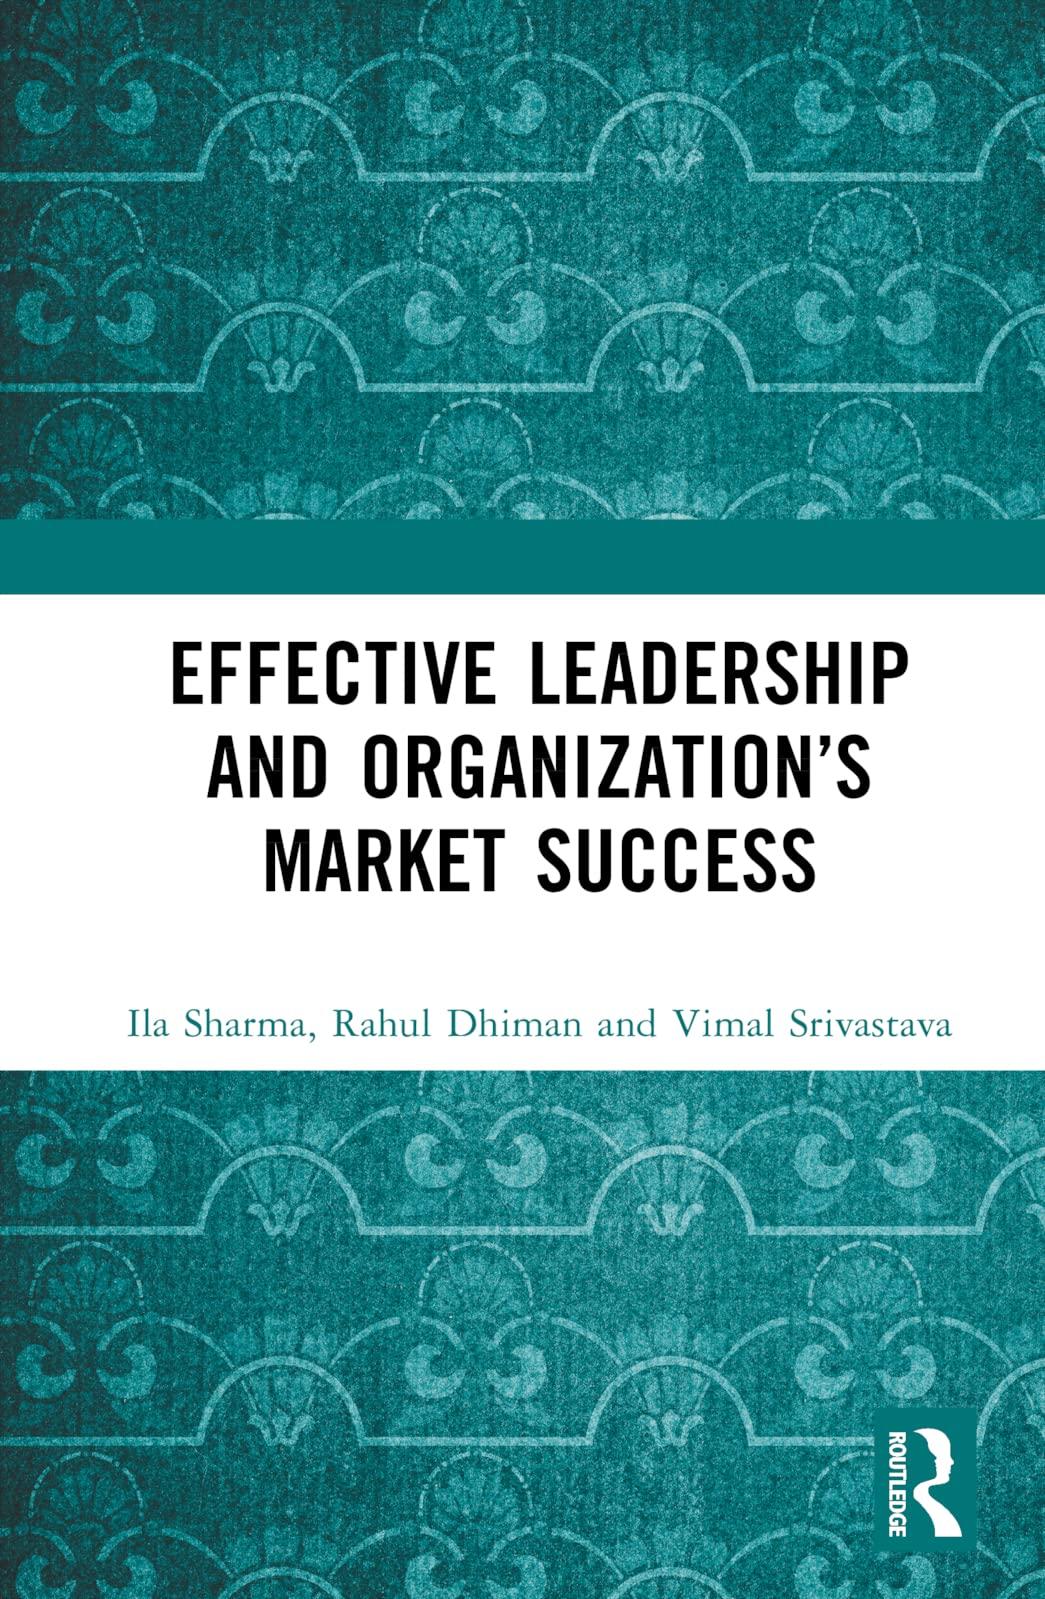 effective leadership and organizations market success 1st edition ila sharma, rahul dhiman, vimal srivastava